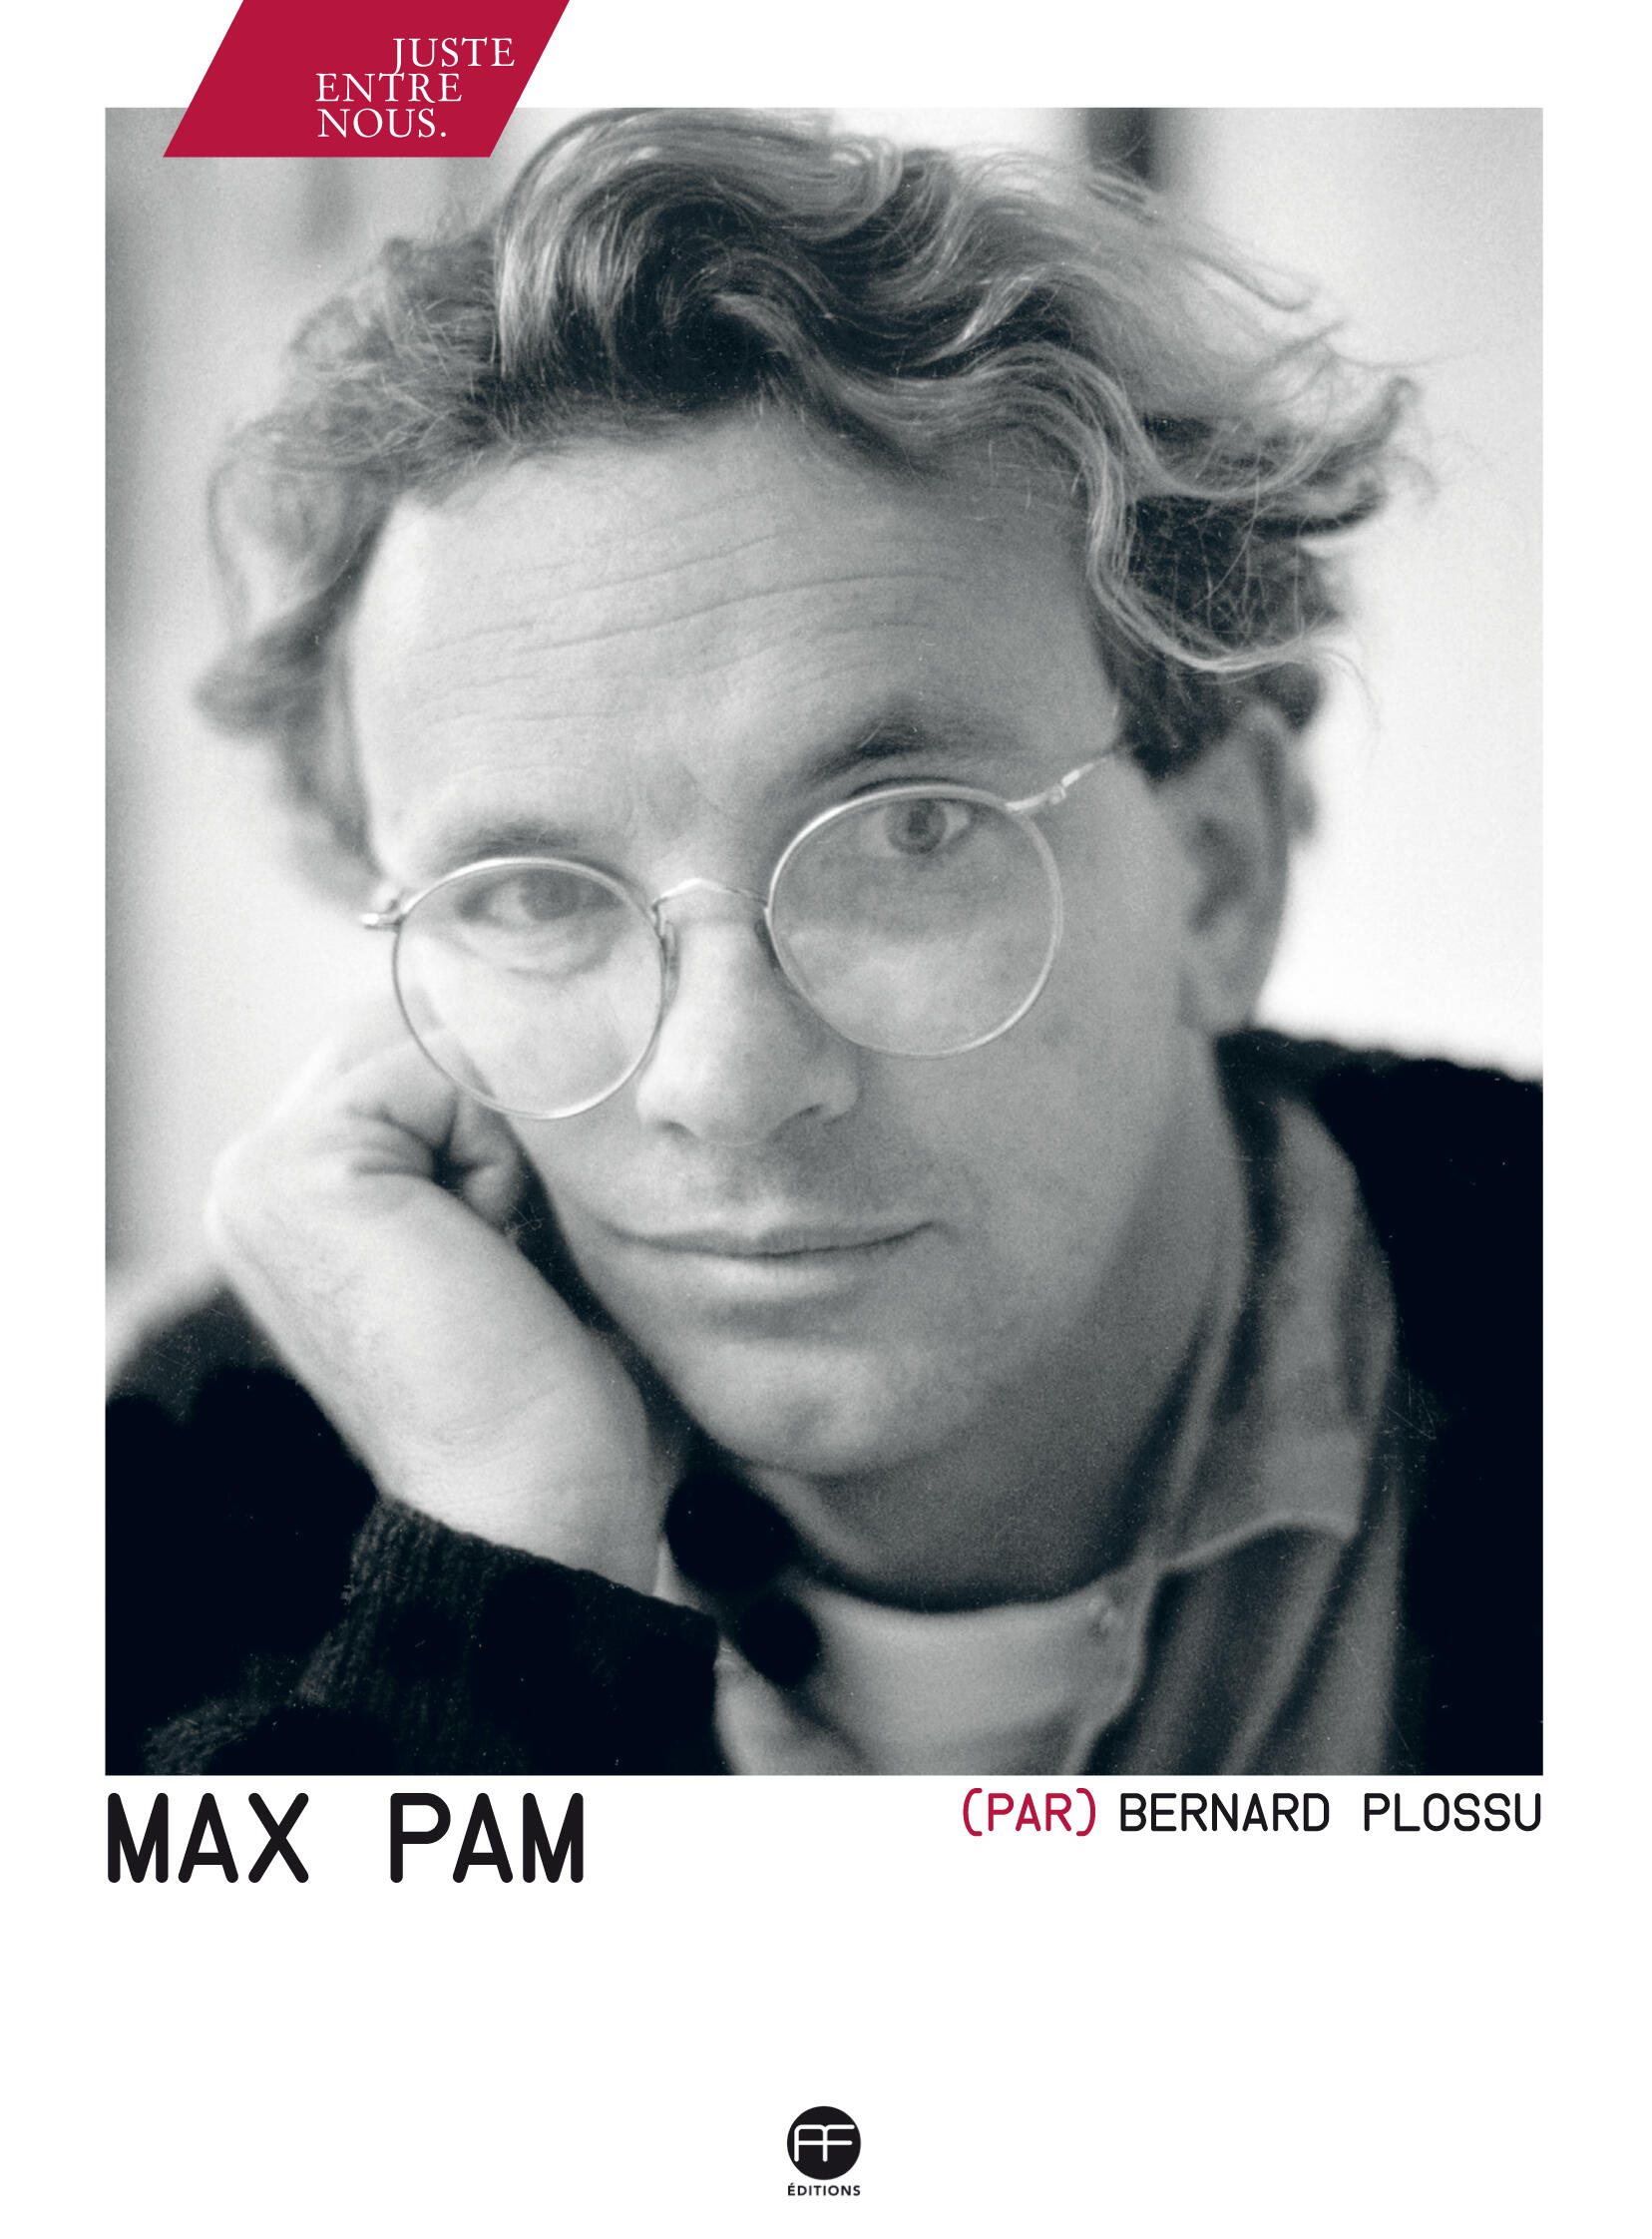 Max Pam by Bernard Plossu